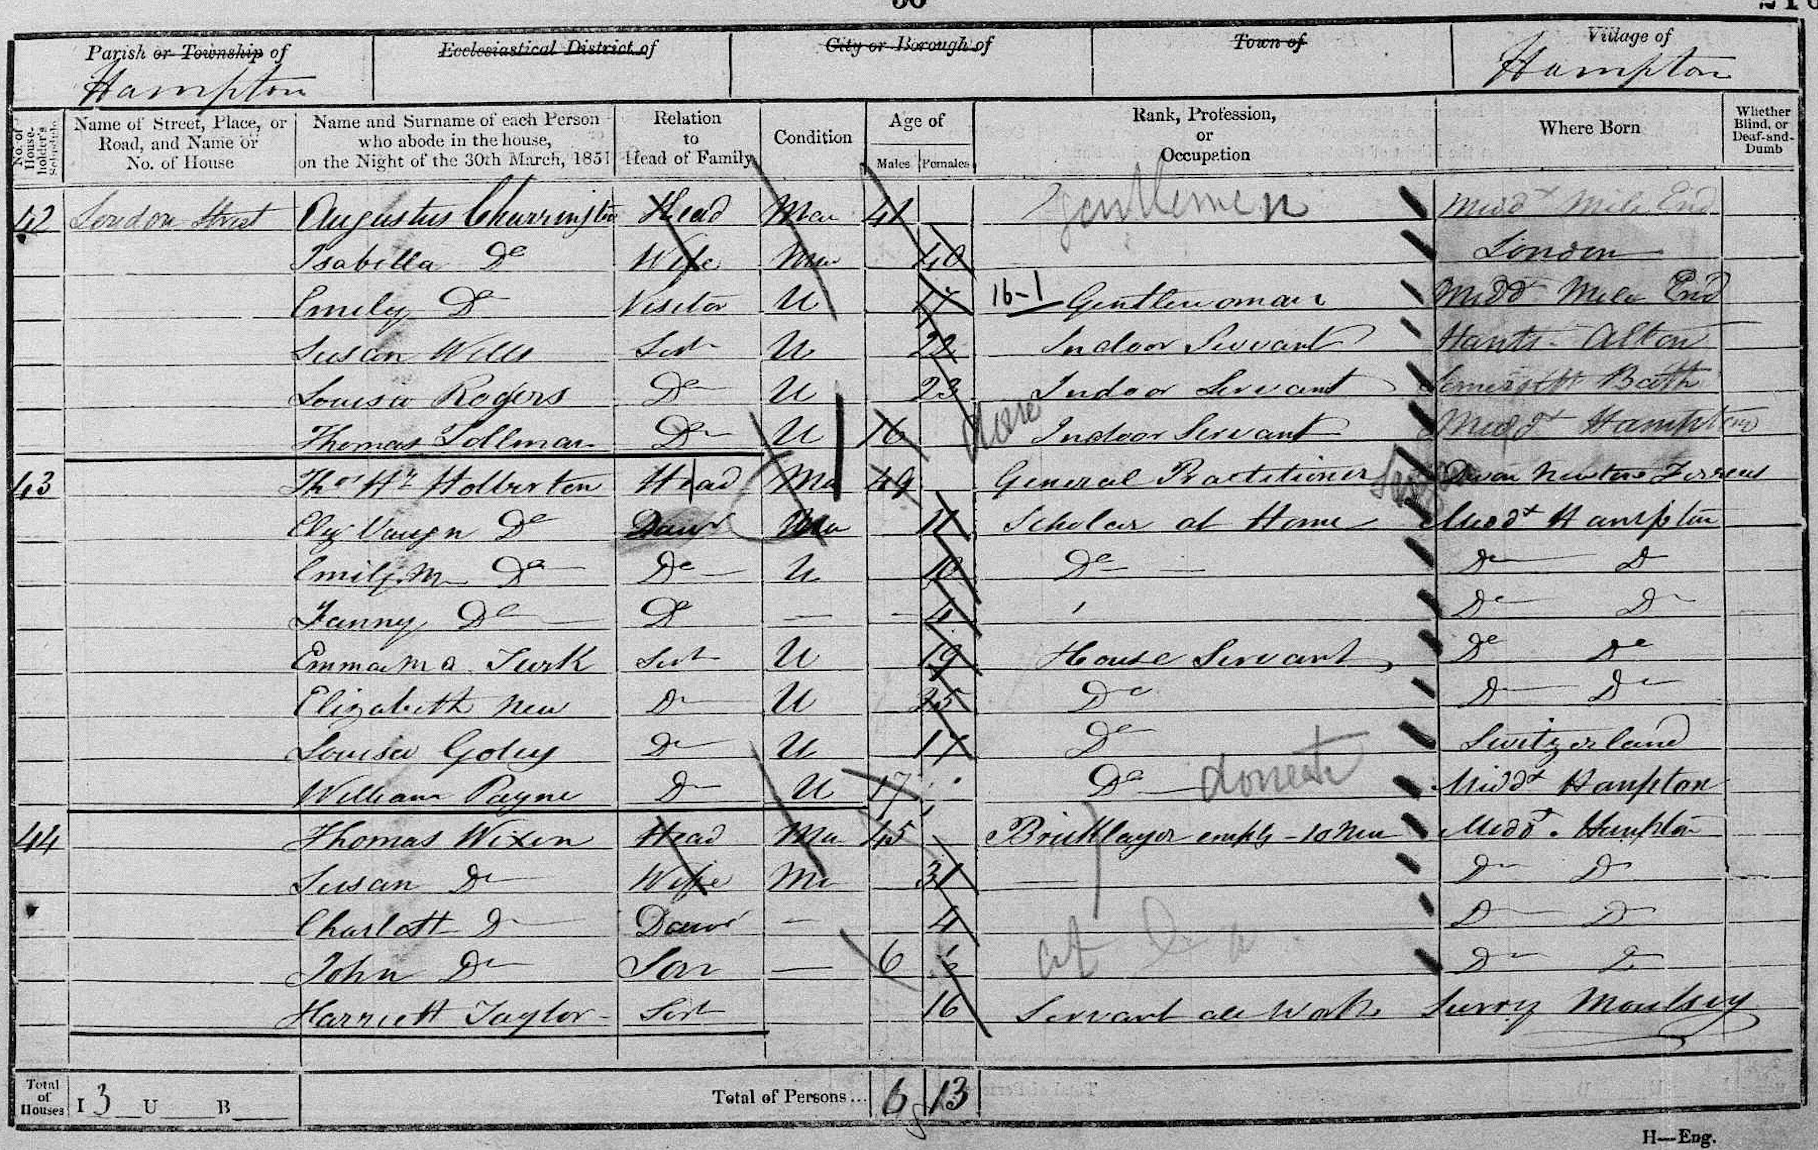 Holberton 1851 census